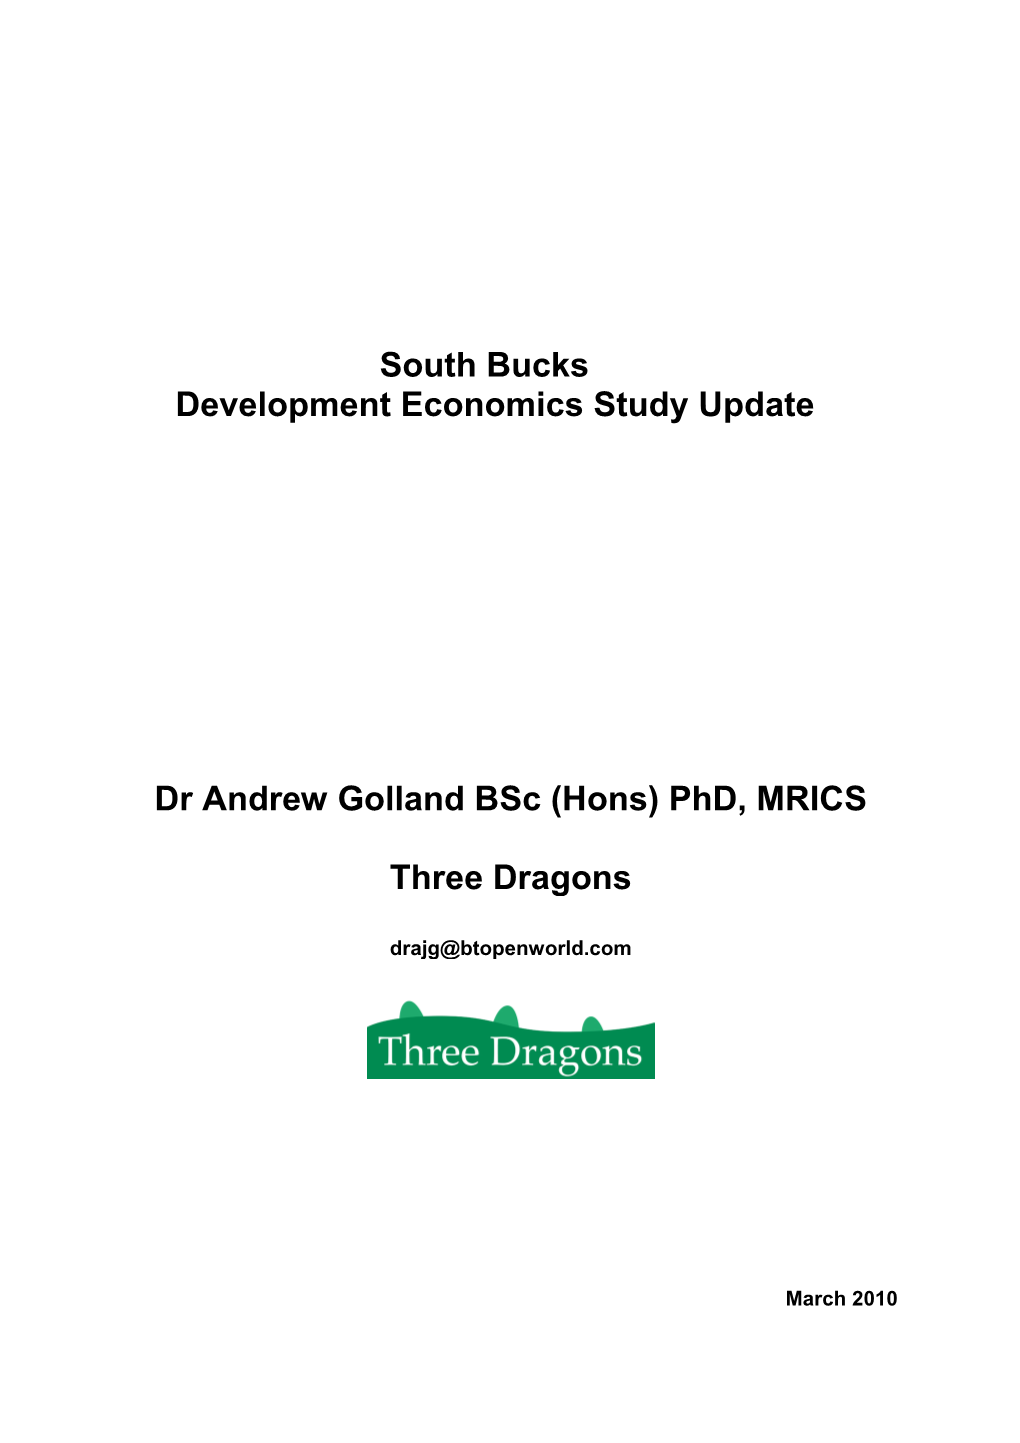 Development Economics Study (Three Dragons, Updated 2010)